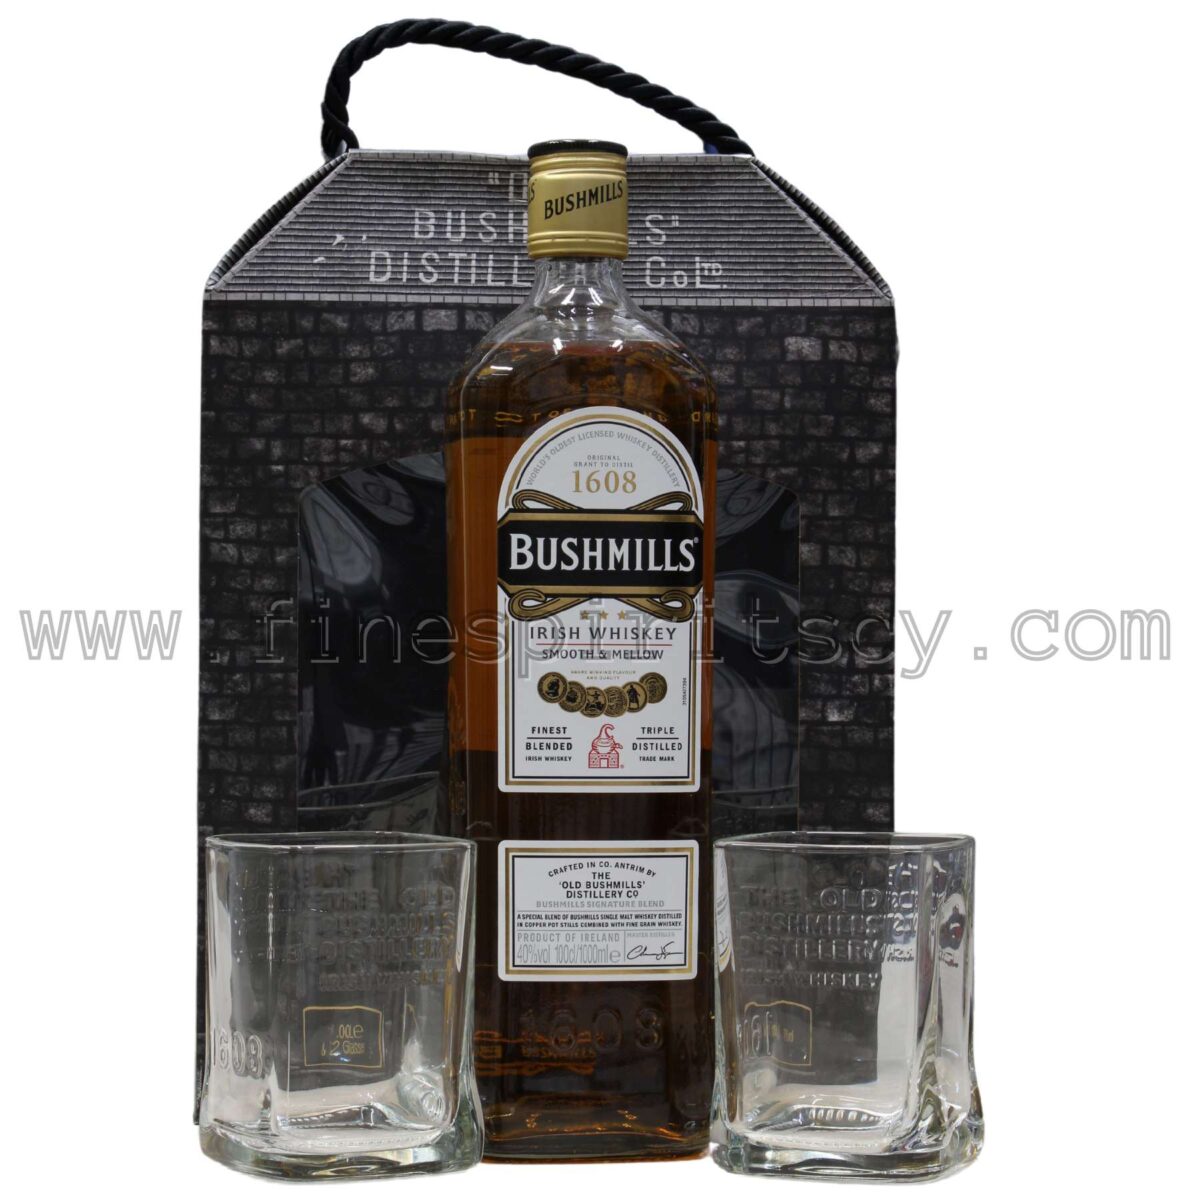 Bushmills The Original Fine Spirits Cyprus Whisky Liter Litre CY Gift Set 2 Glass